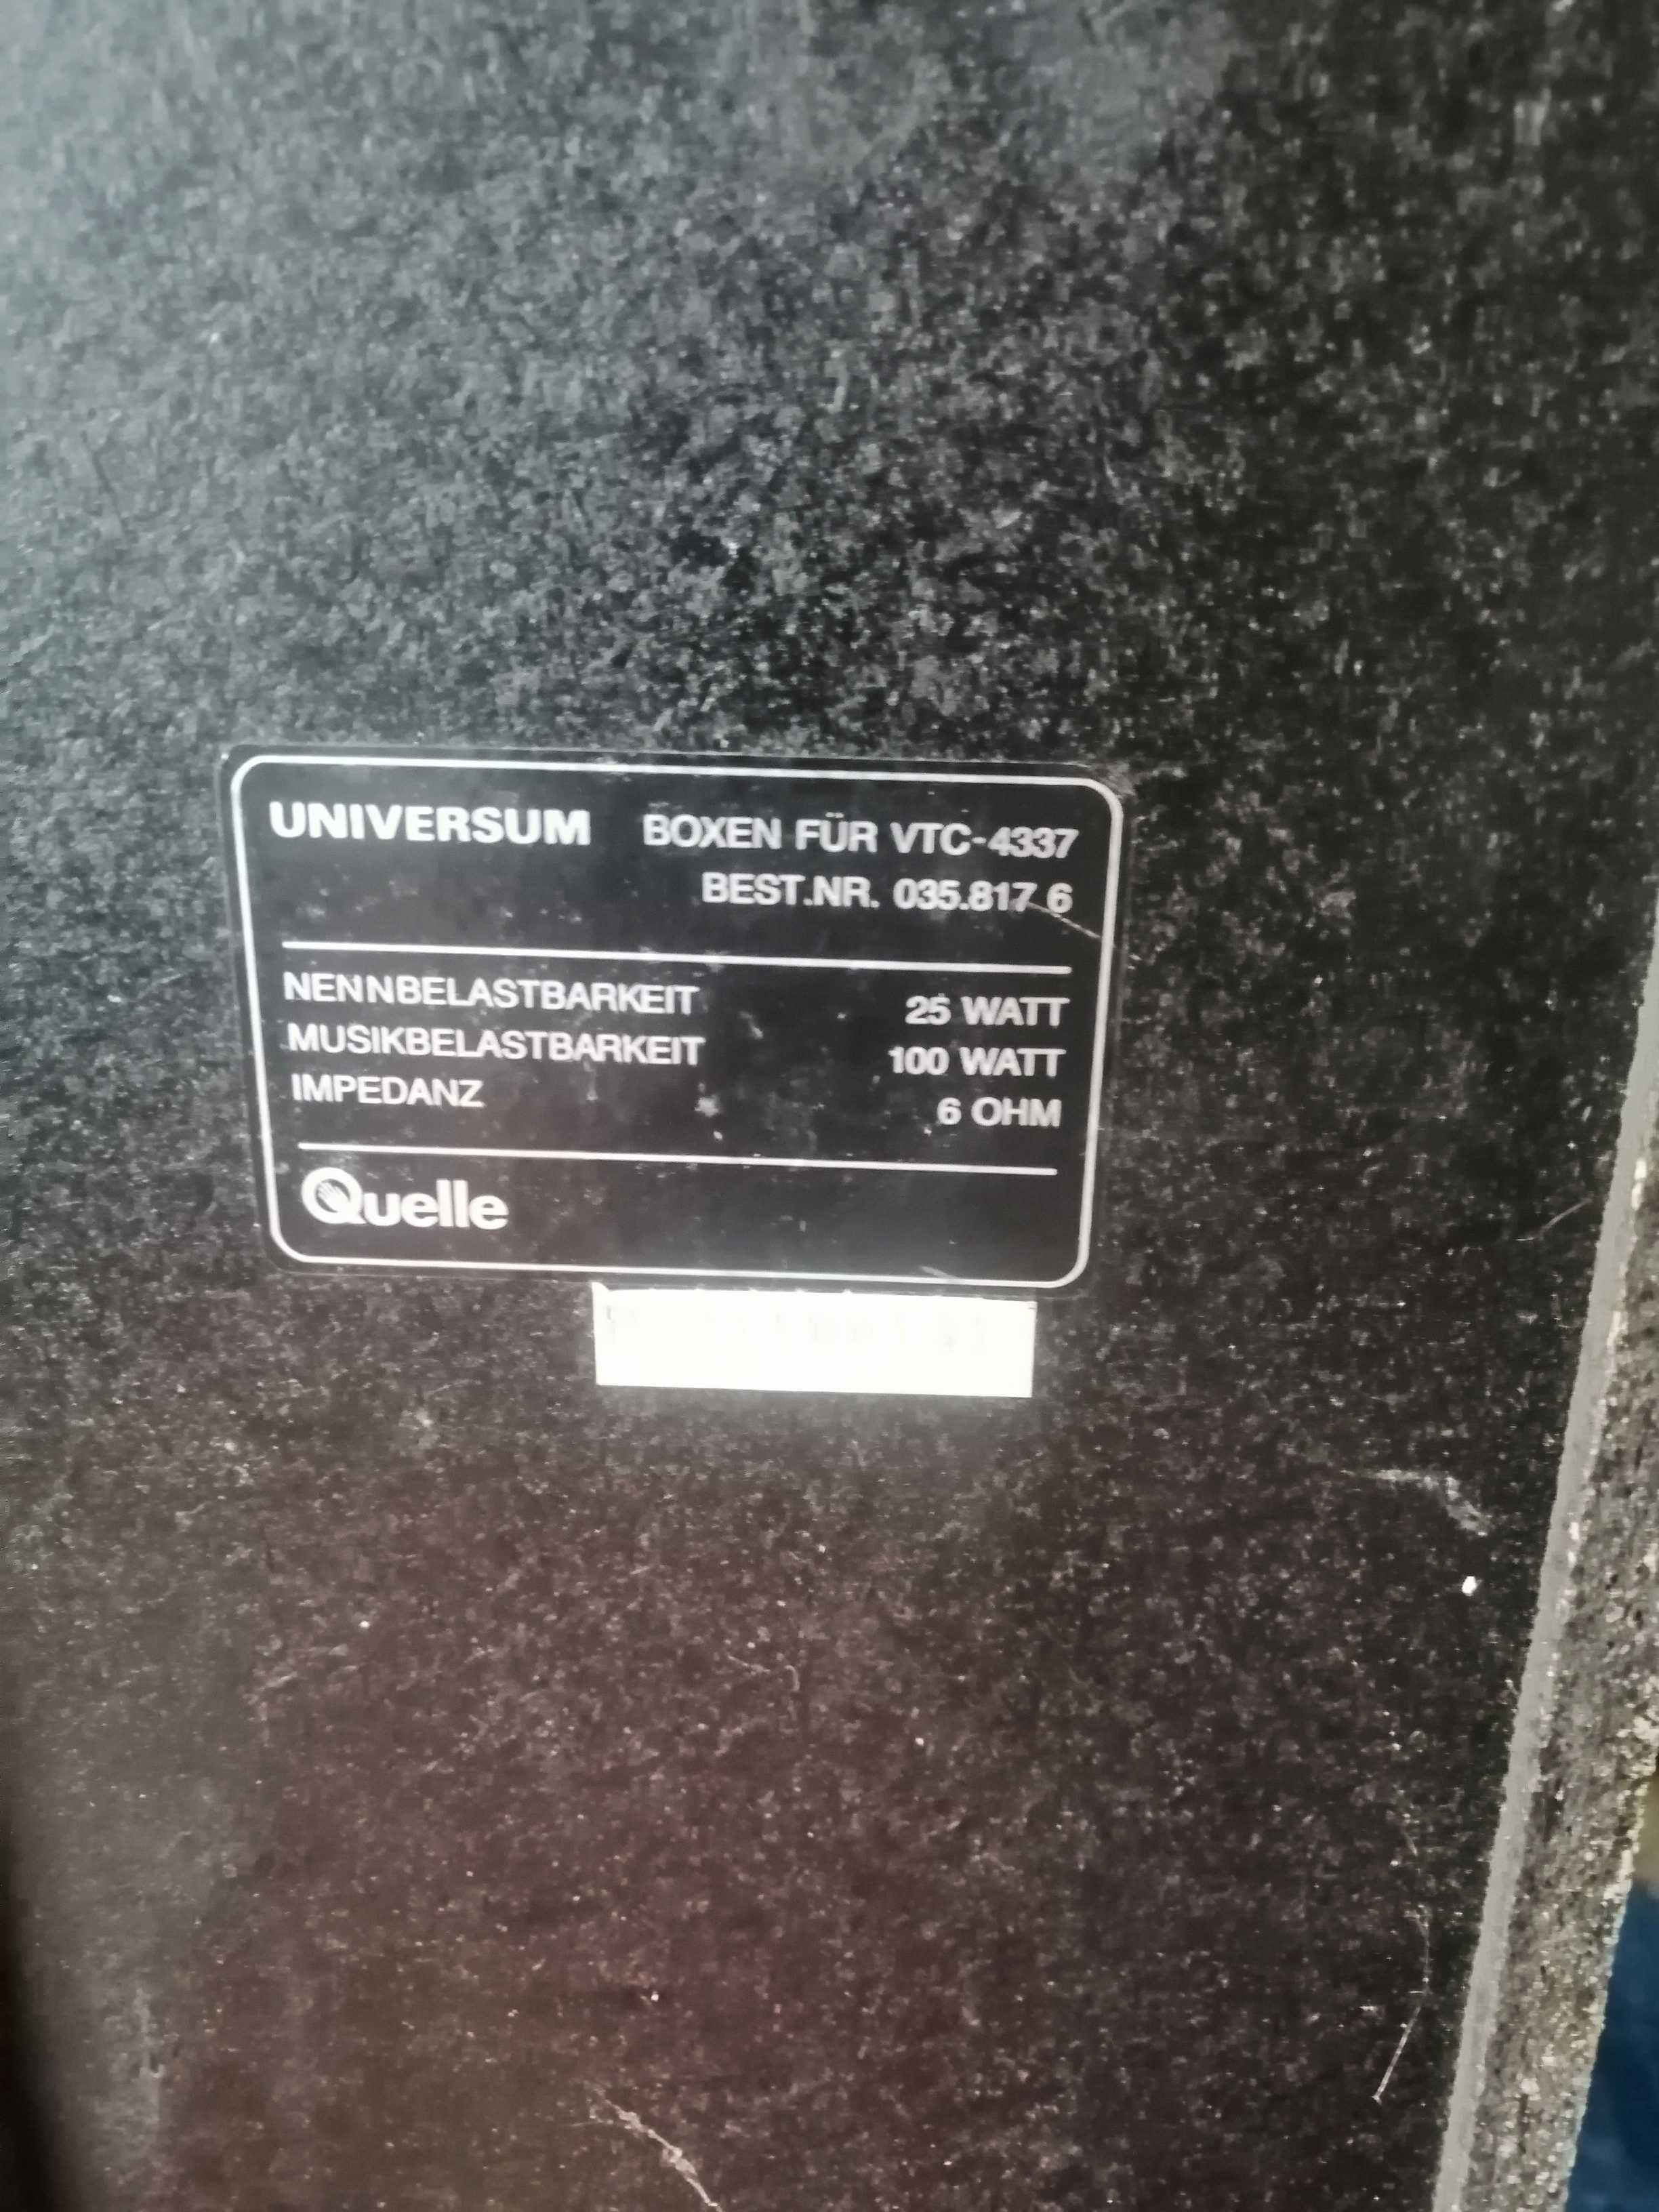 kolumny glosnikowe UNIVERSUM boxen FUR VTC 4337